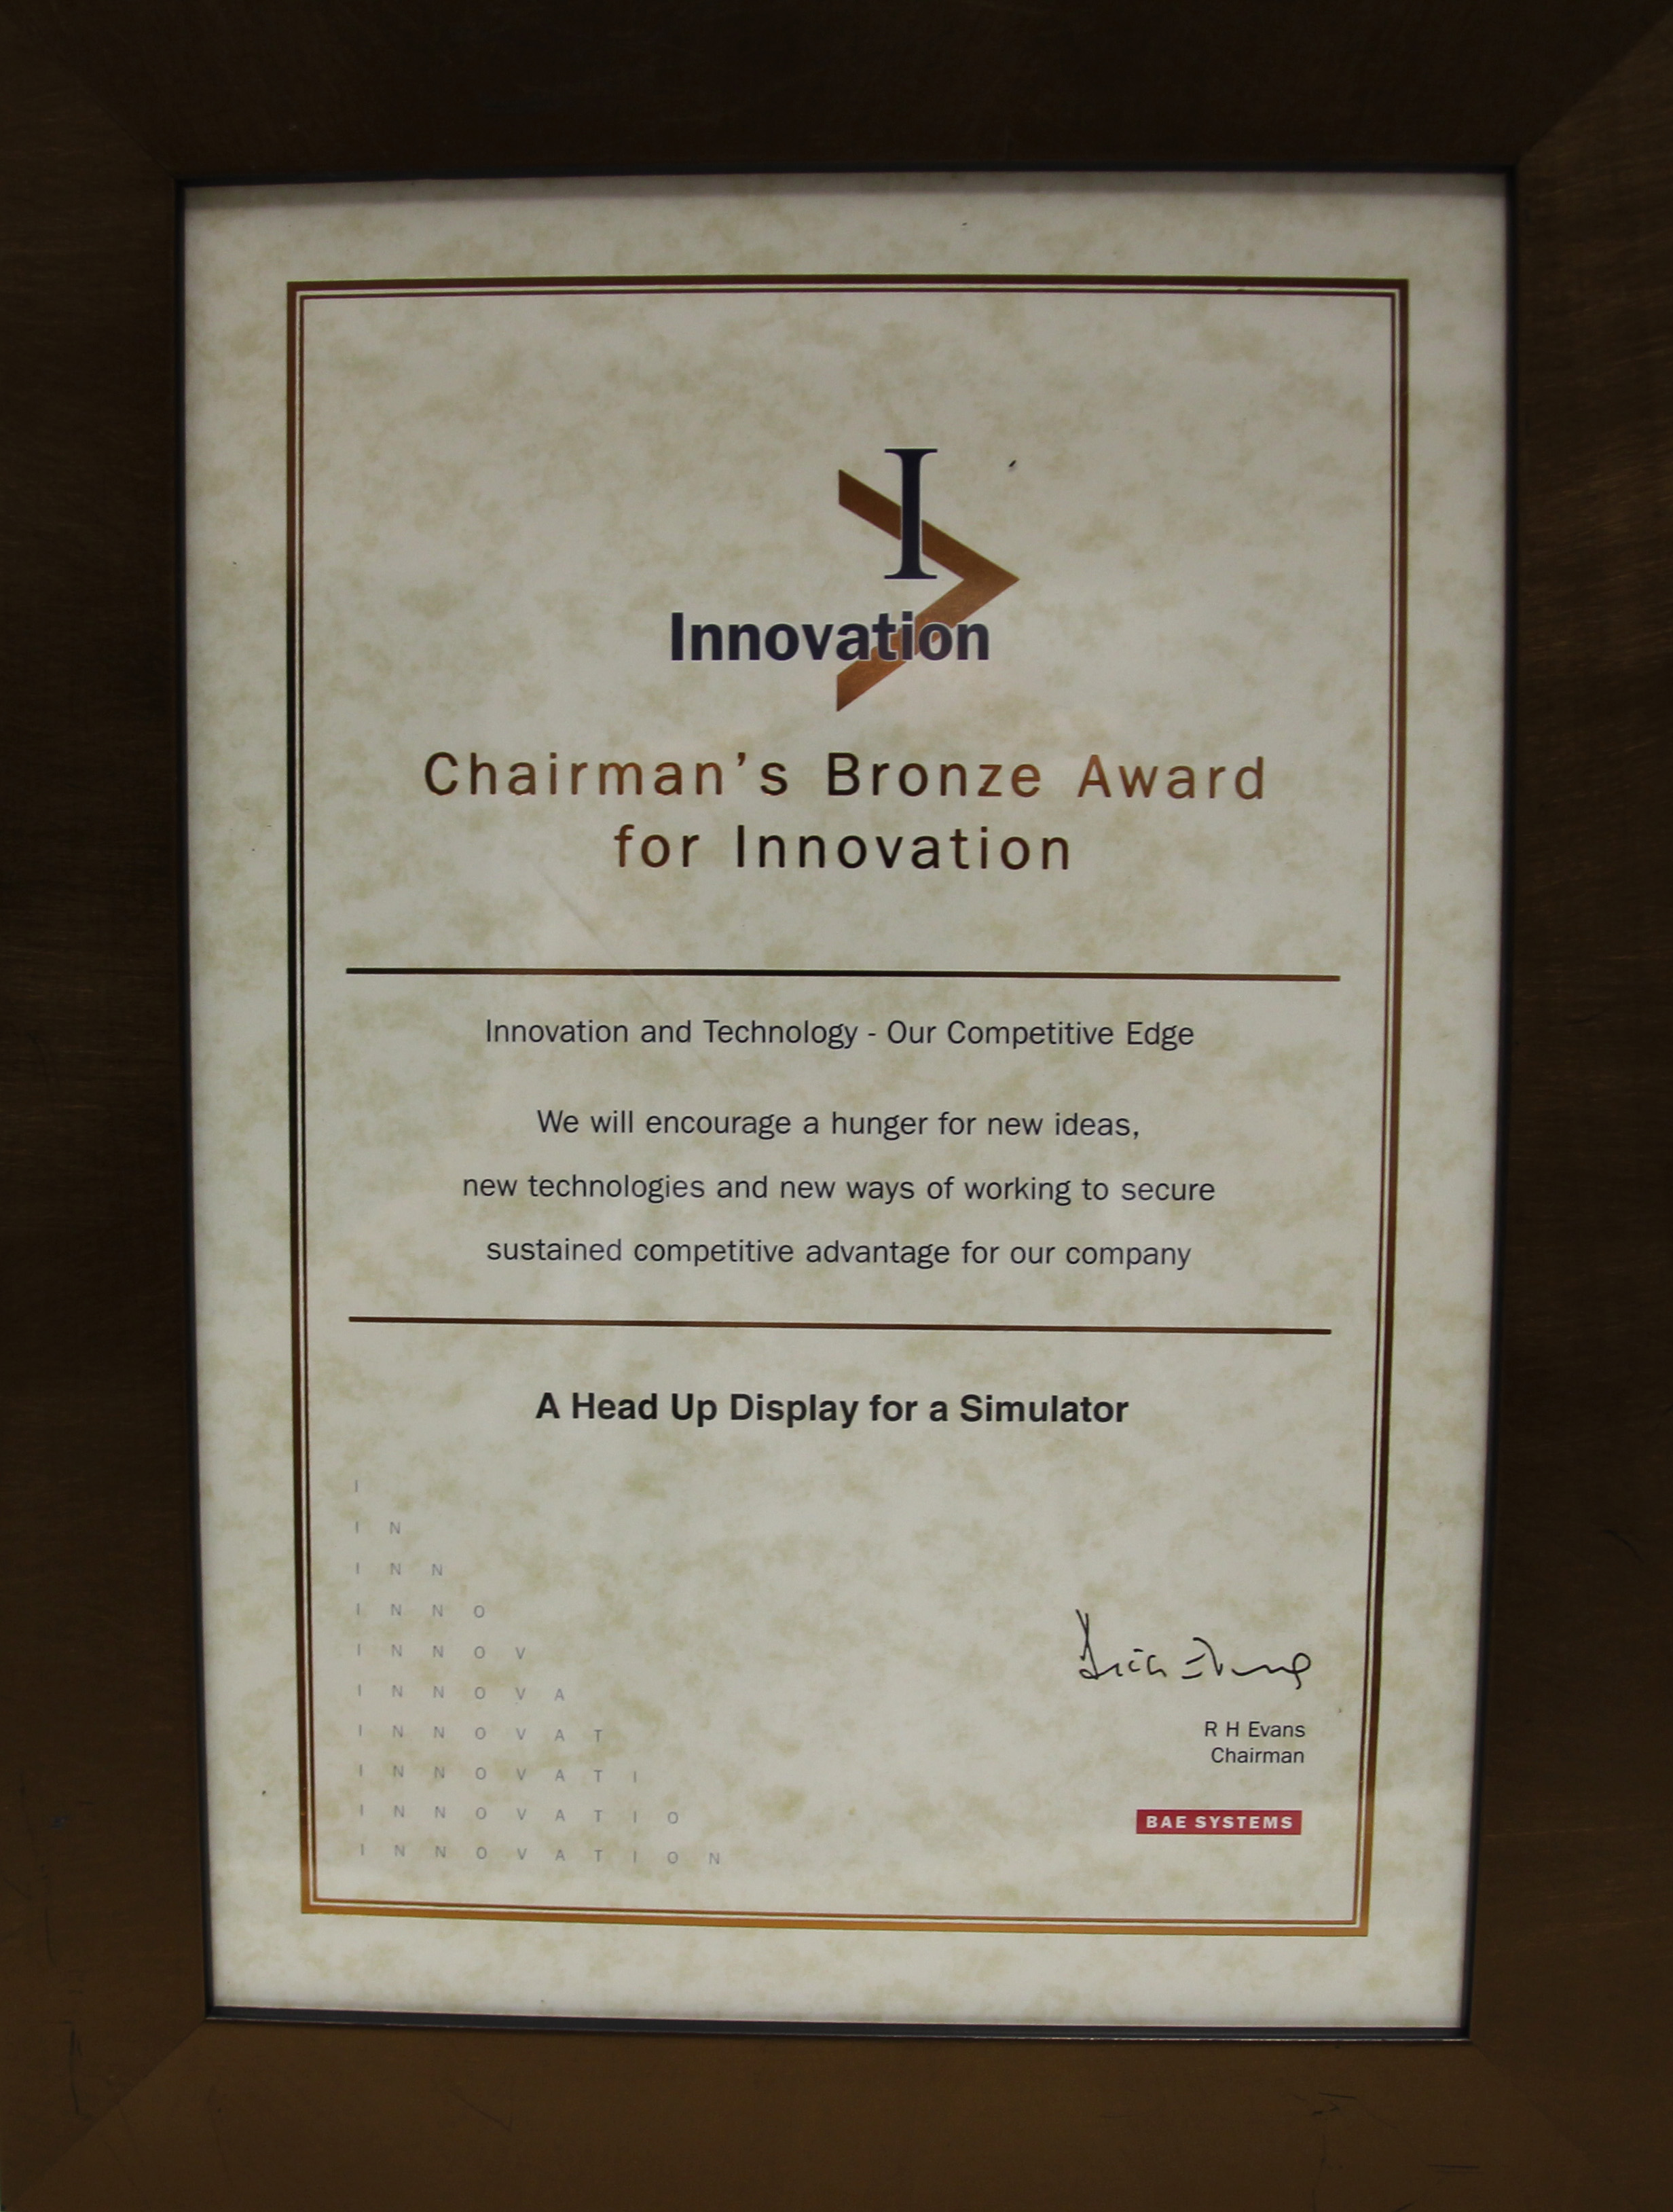 Chairman's Bronze Award for Innovation